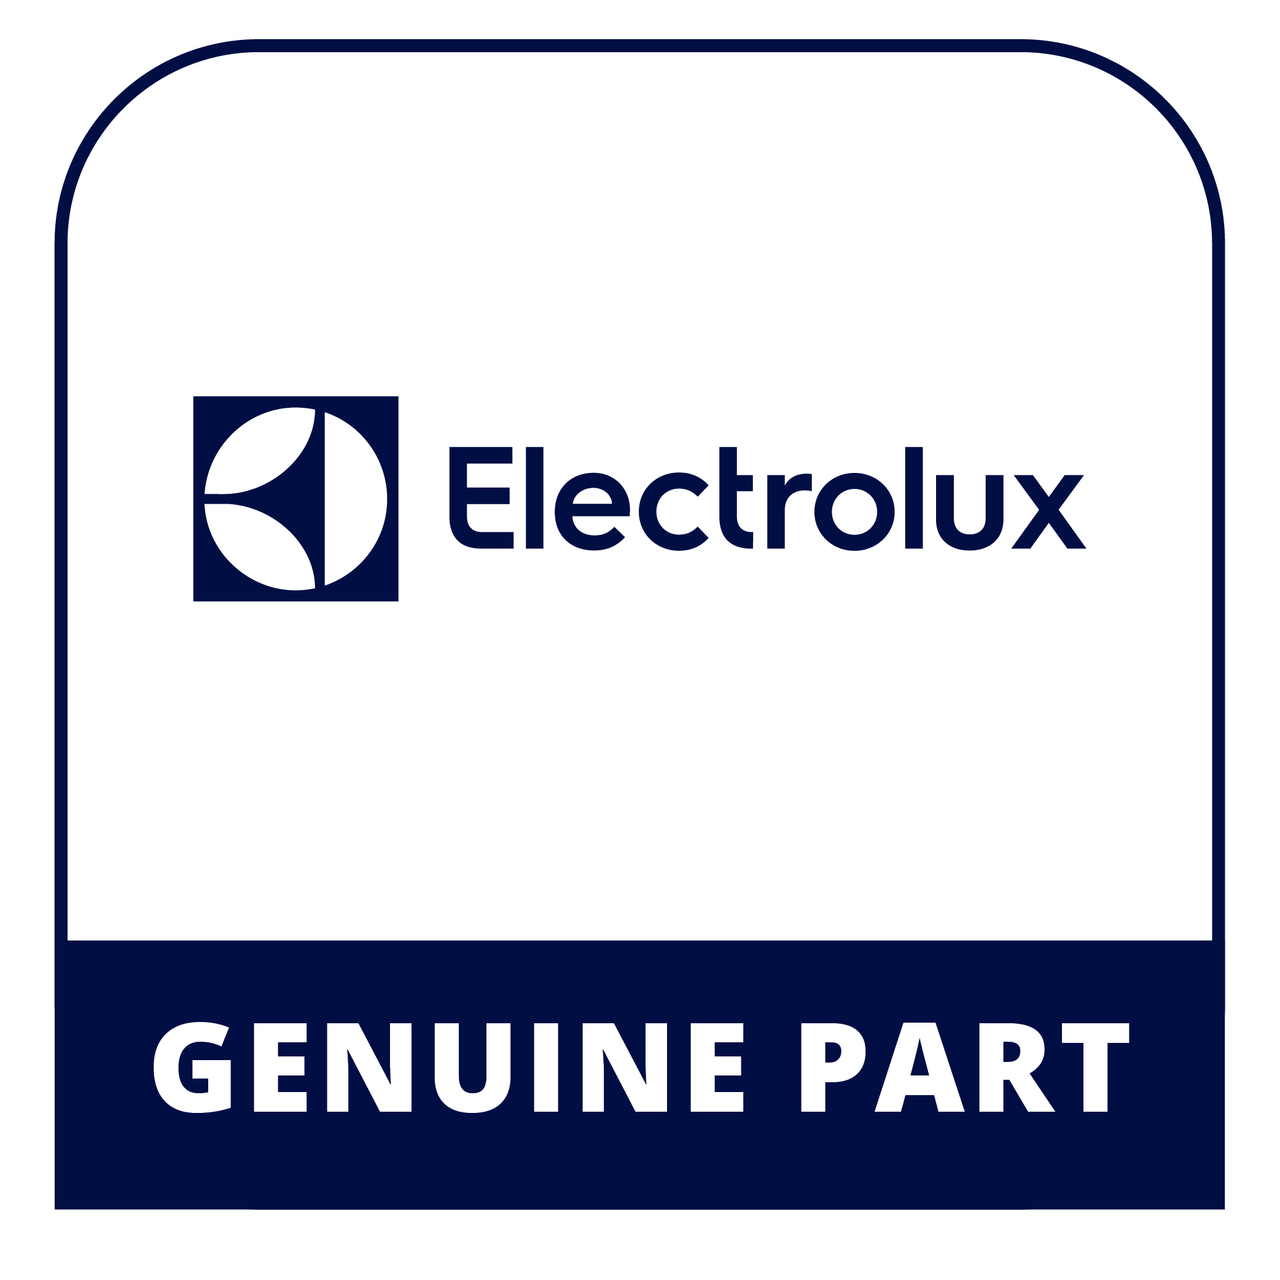 Frigidaire - Electrolux 316560161 - Controller - Genuine Electrolux Part